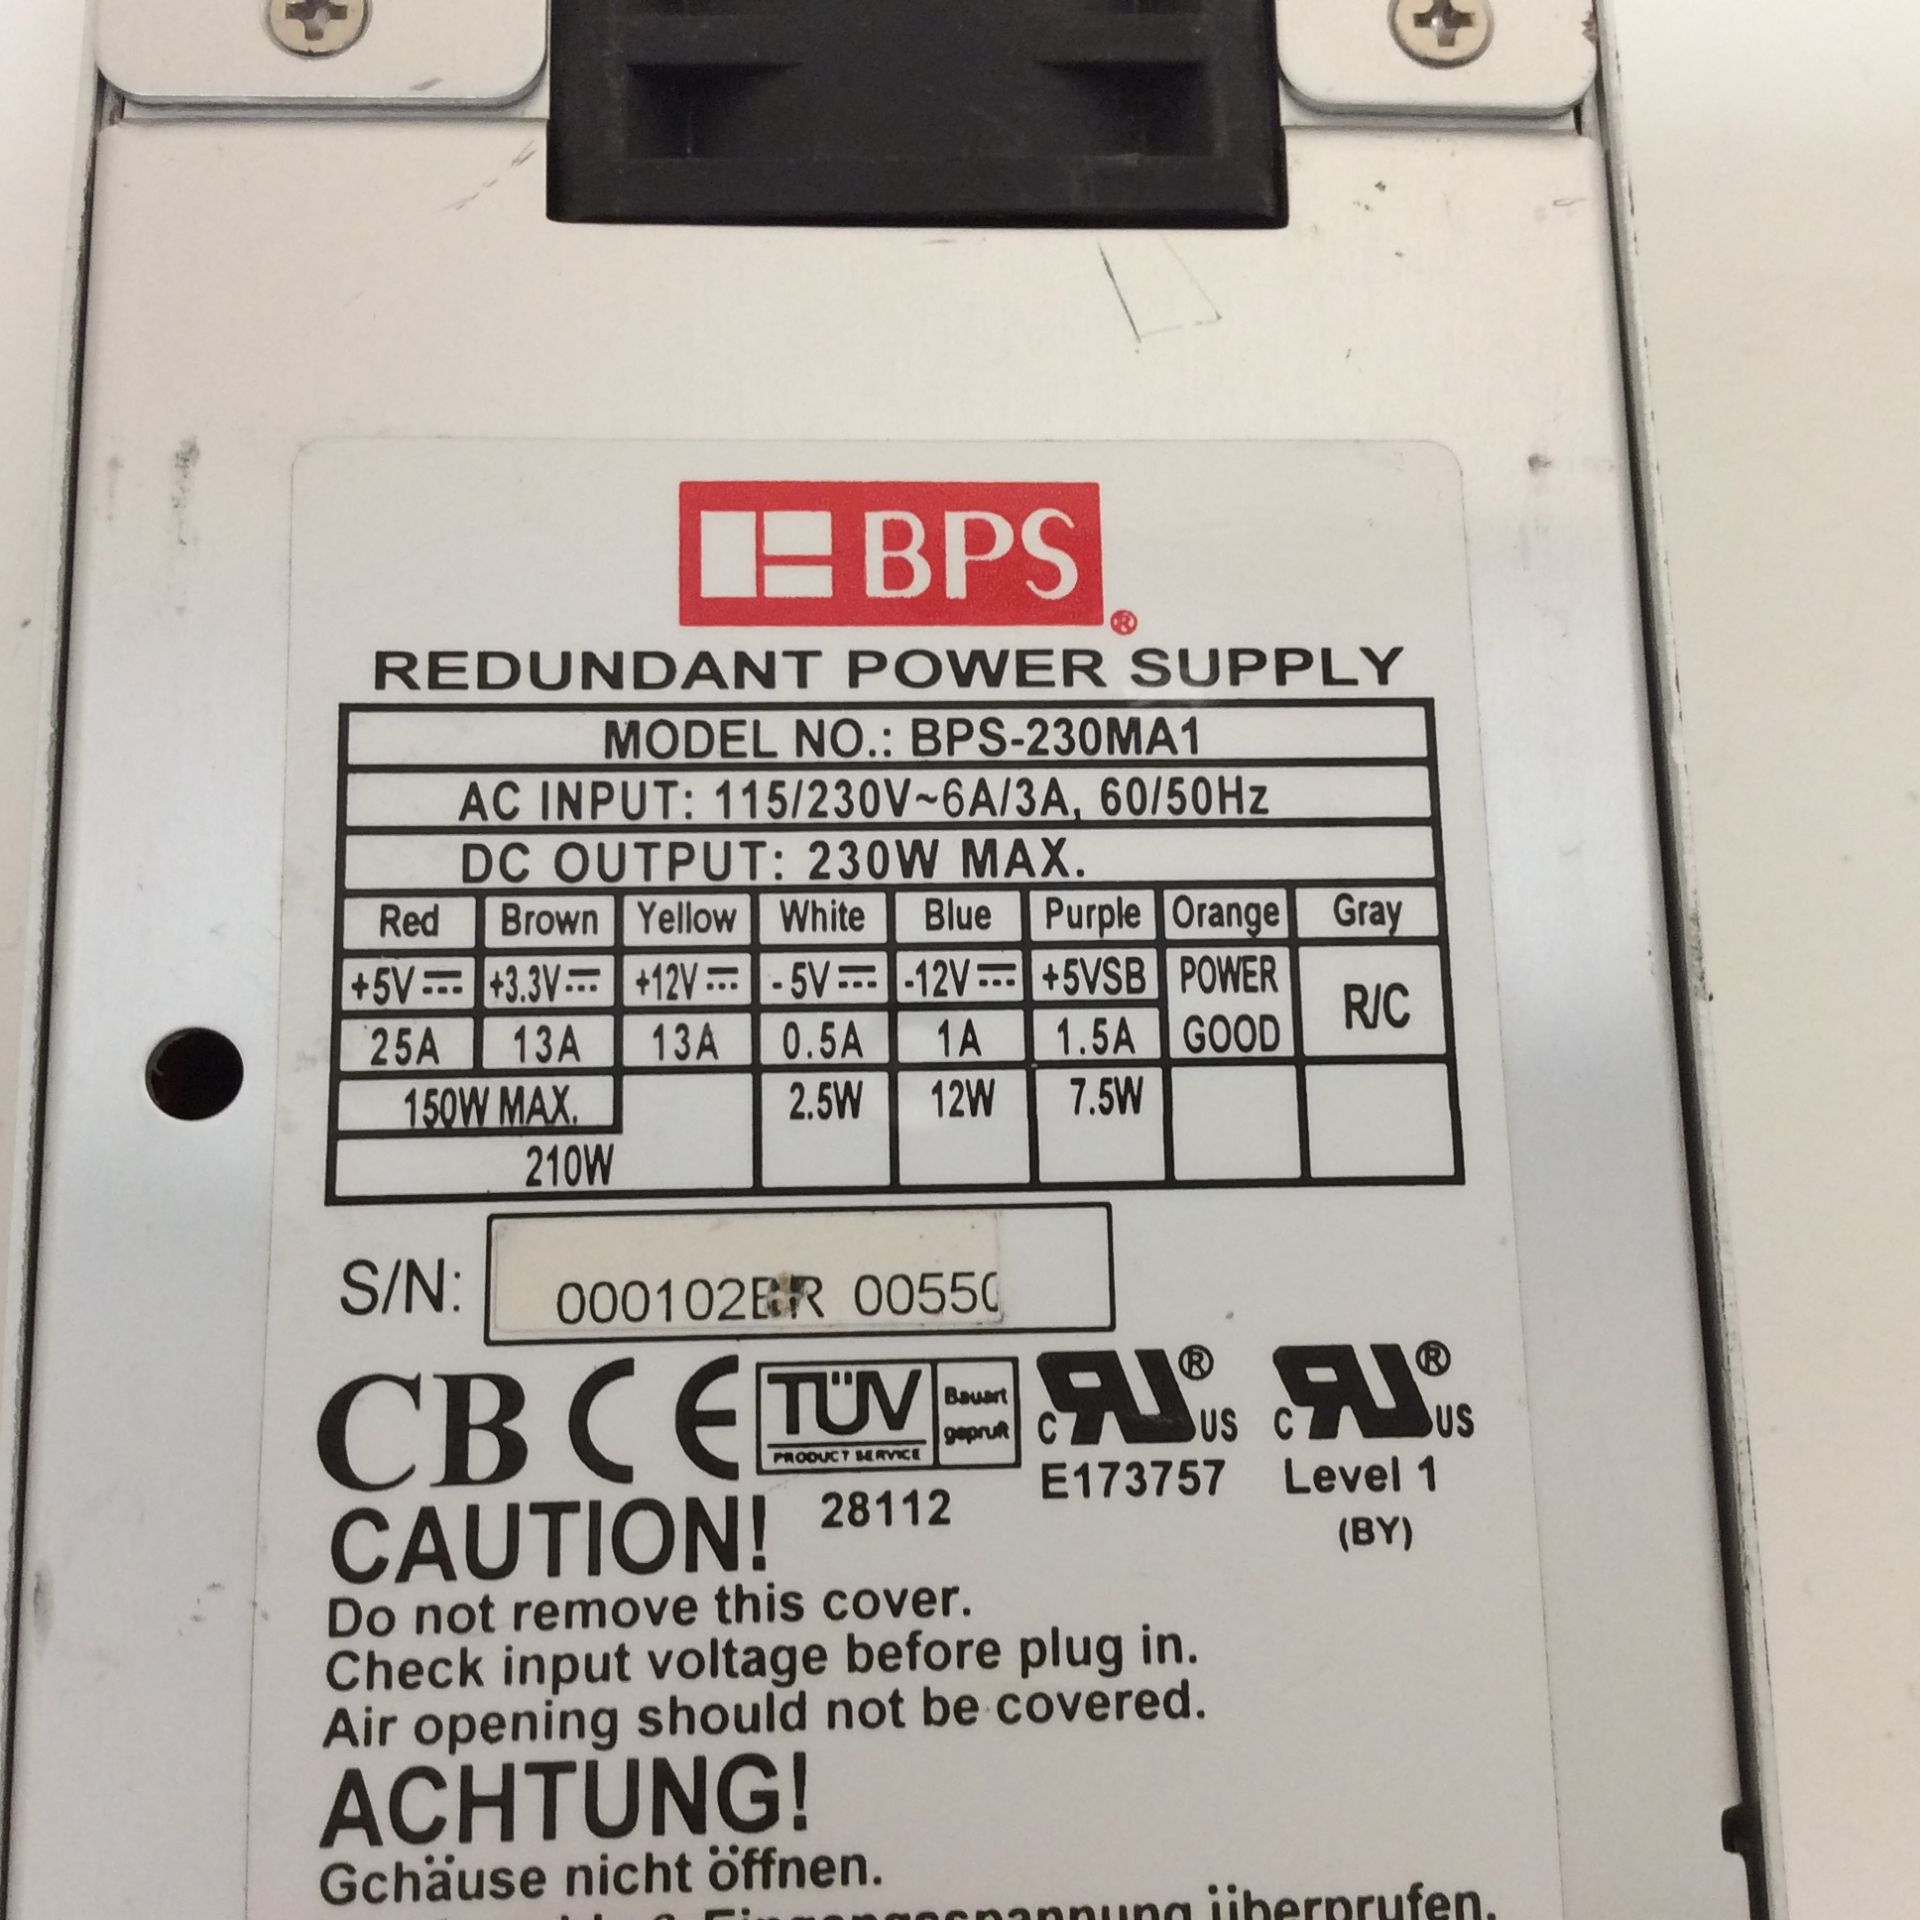 Bps redundant power supply - modle bps-230ma1 - Image 2 of 3